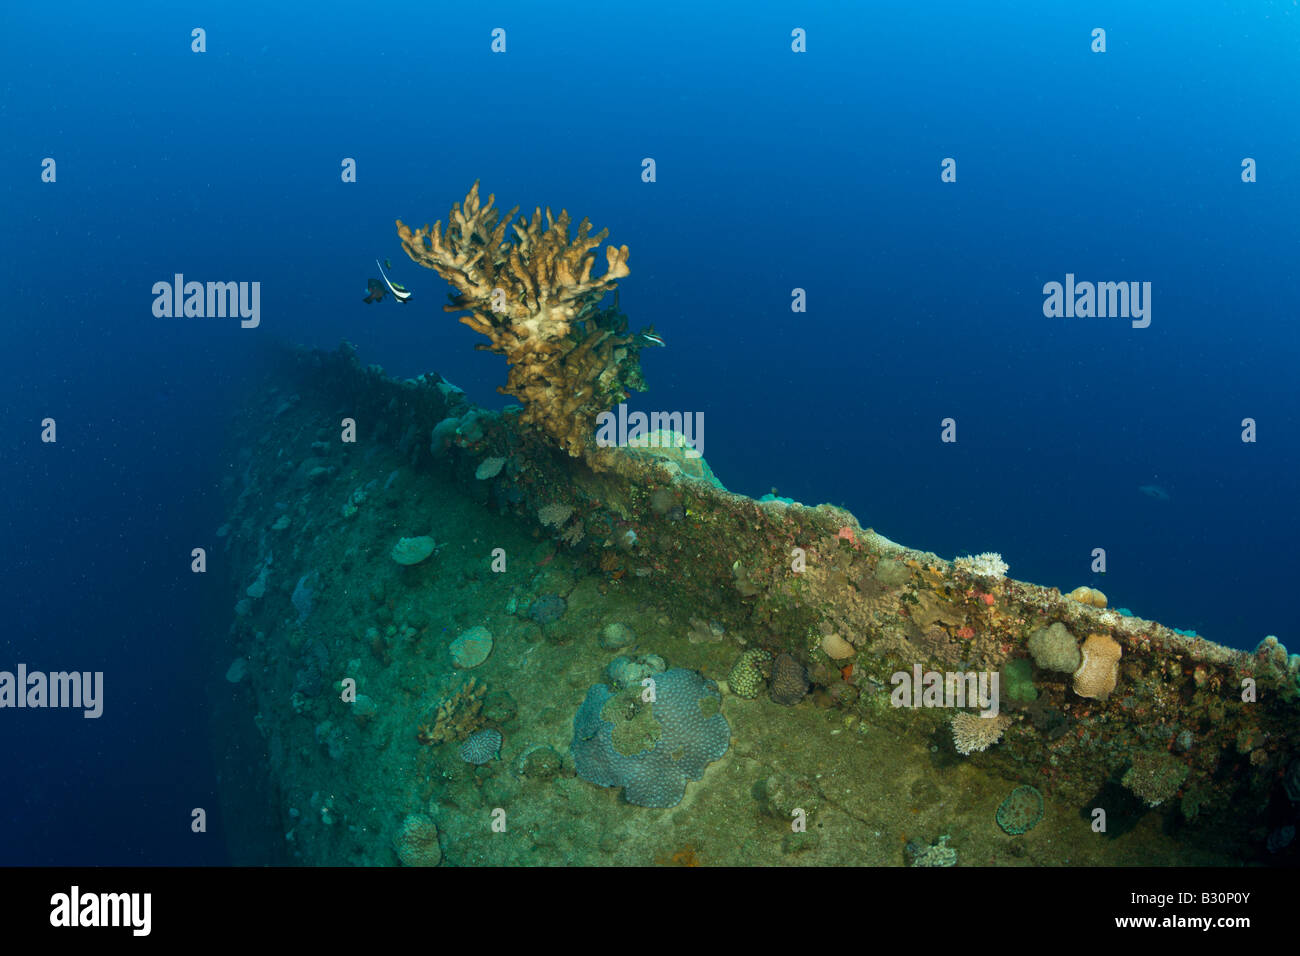 Big Fire Coral at bottom of Wreck HIJMS Nagato Battleship Marshall Islands Bikini Atoll Micronesia Pacific Ocean Stock Photo